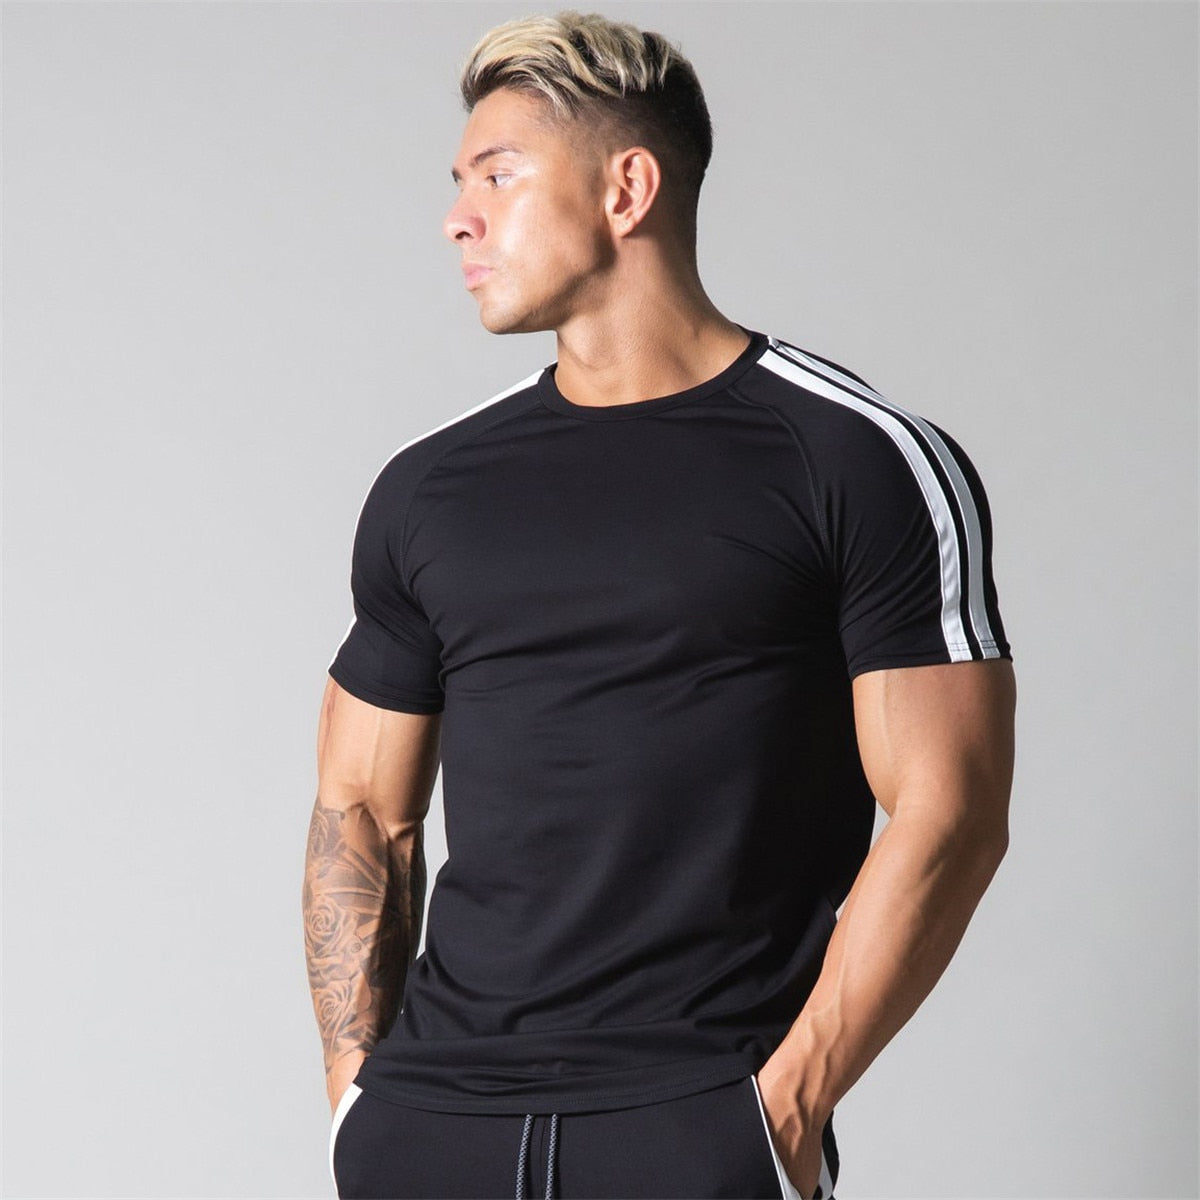 Men Gym Fitness Shirt Black